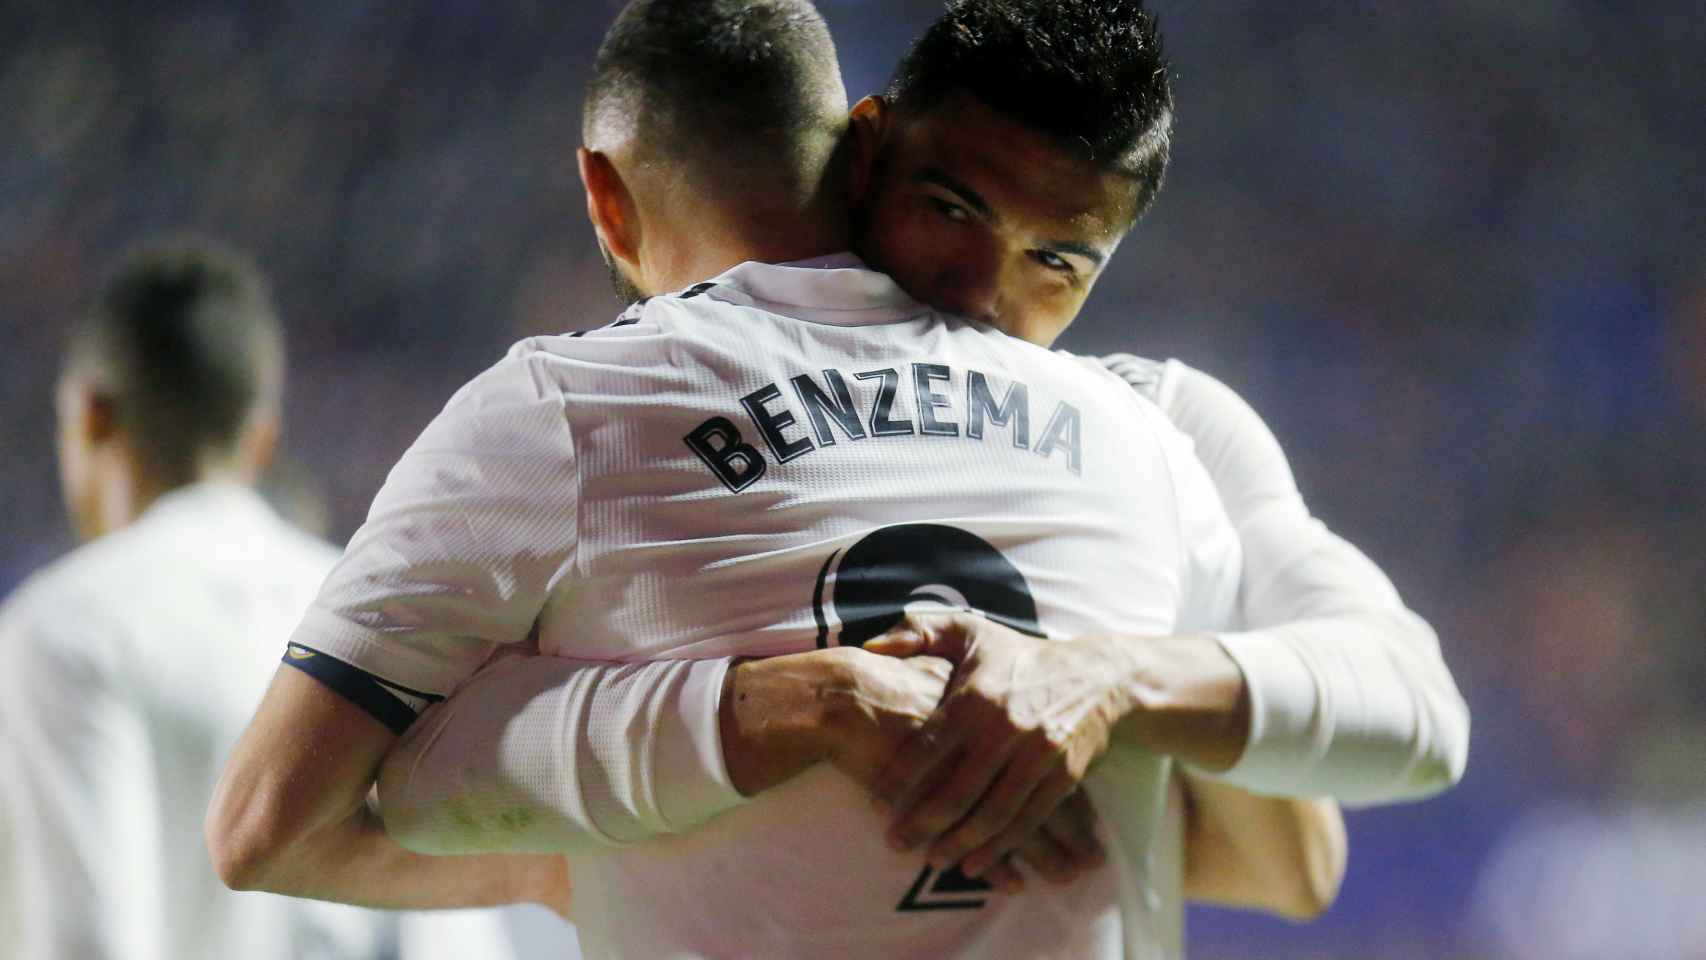 Casemiro abraza a Benzema tras su gol ante el Levante